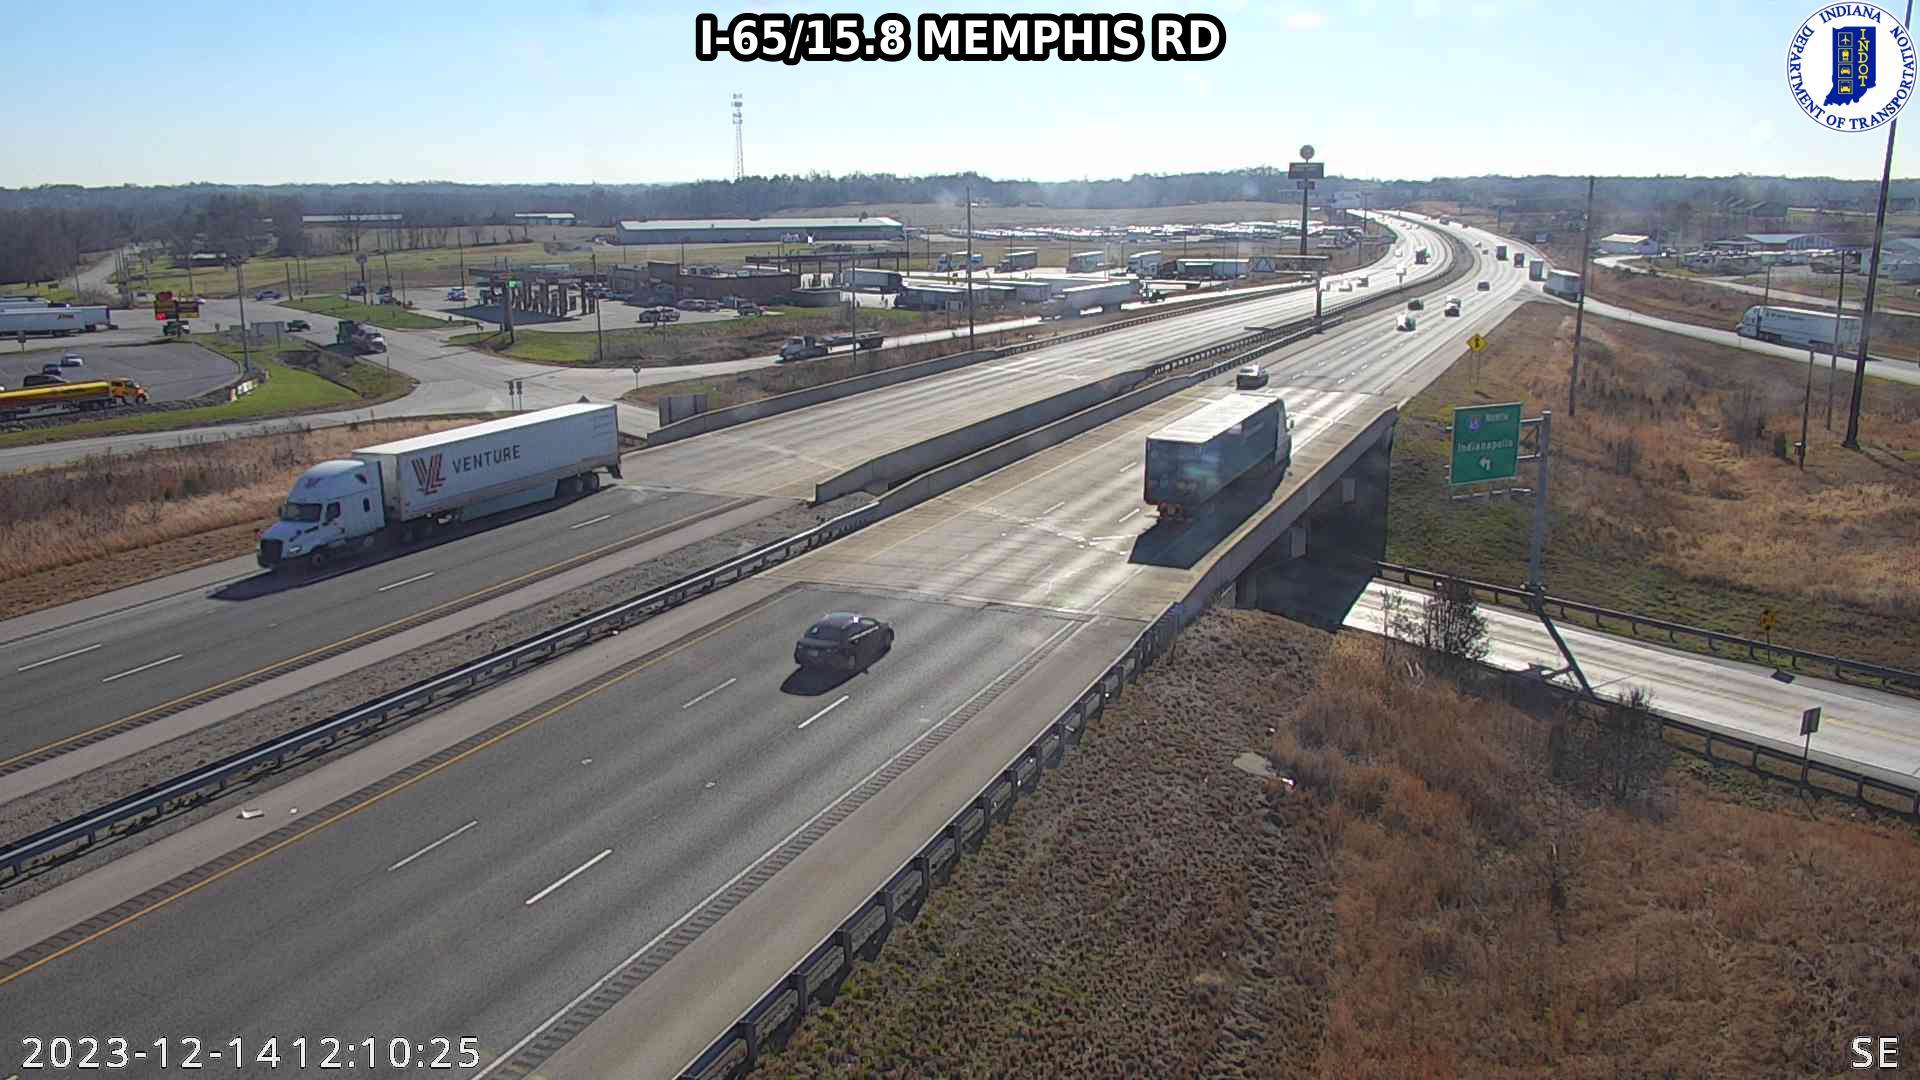 Traffic Cam Memphis: I-65: I-65/15.8 - RD : I-65/15.8 - RD